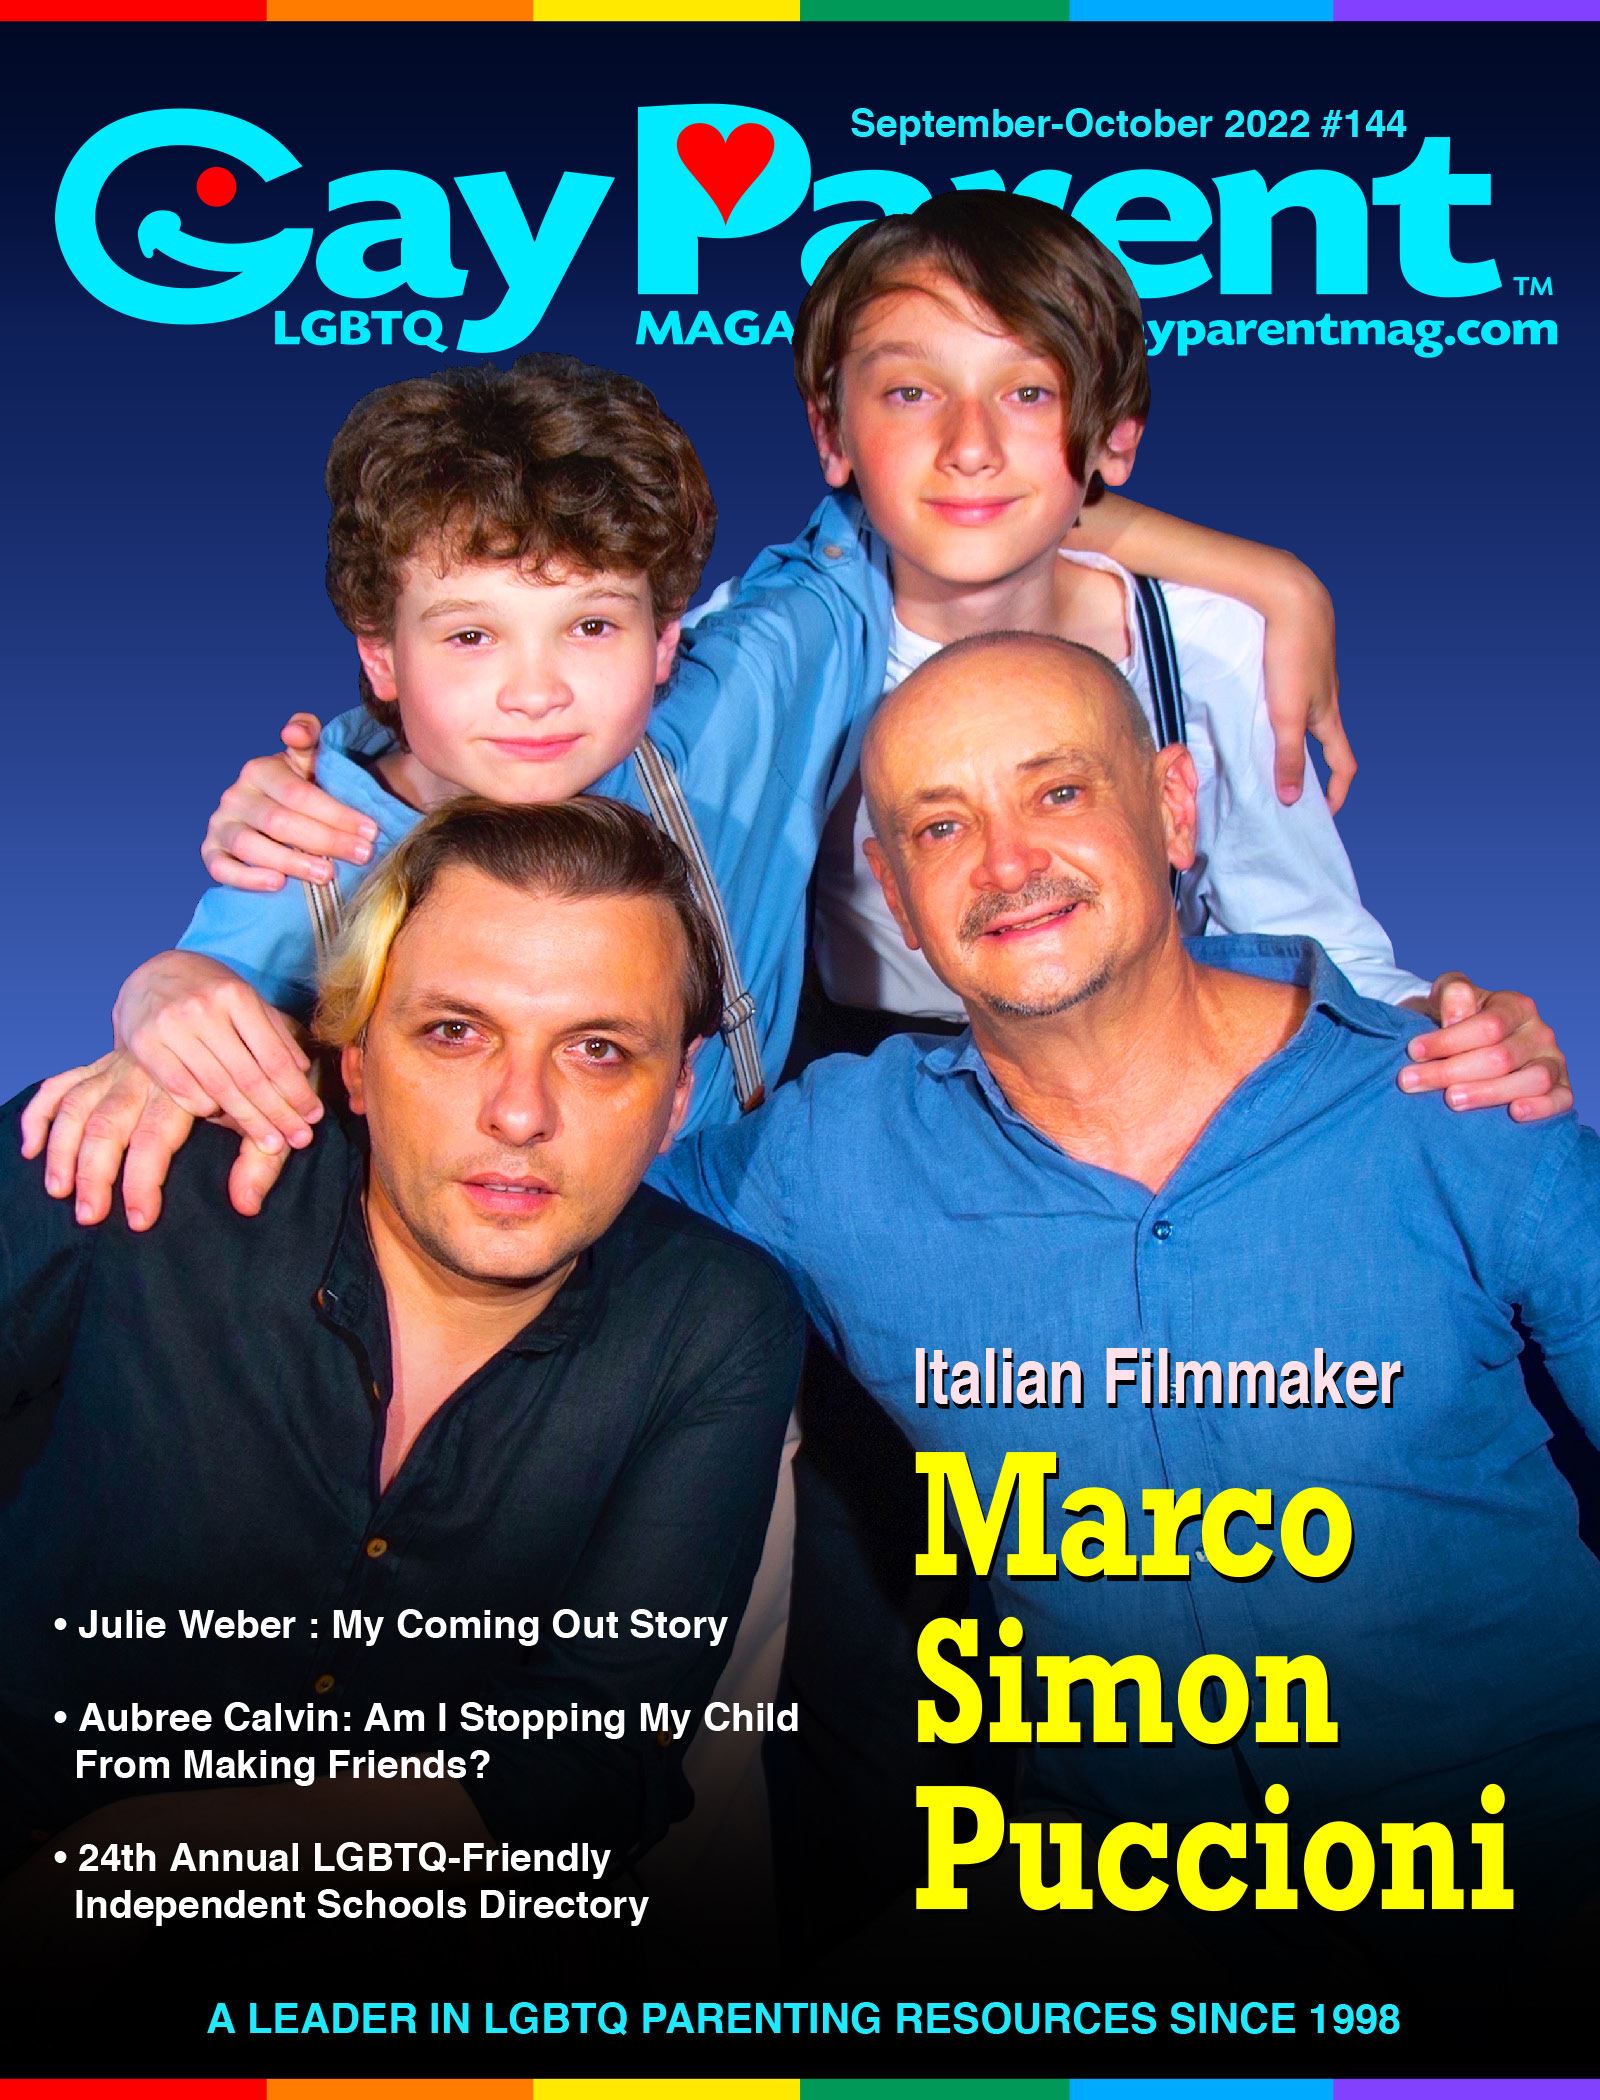 Gay Parent Magazine